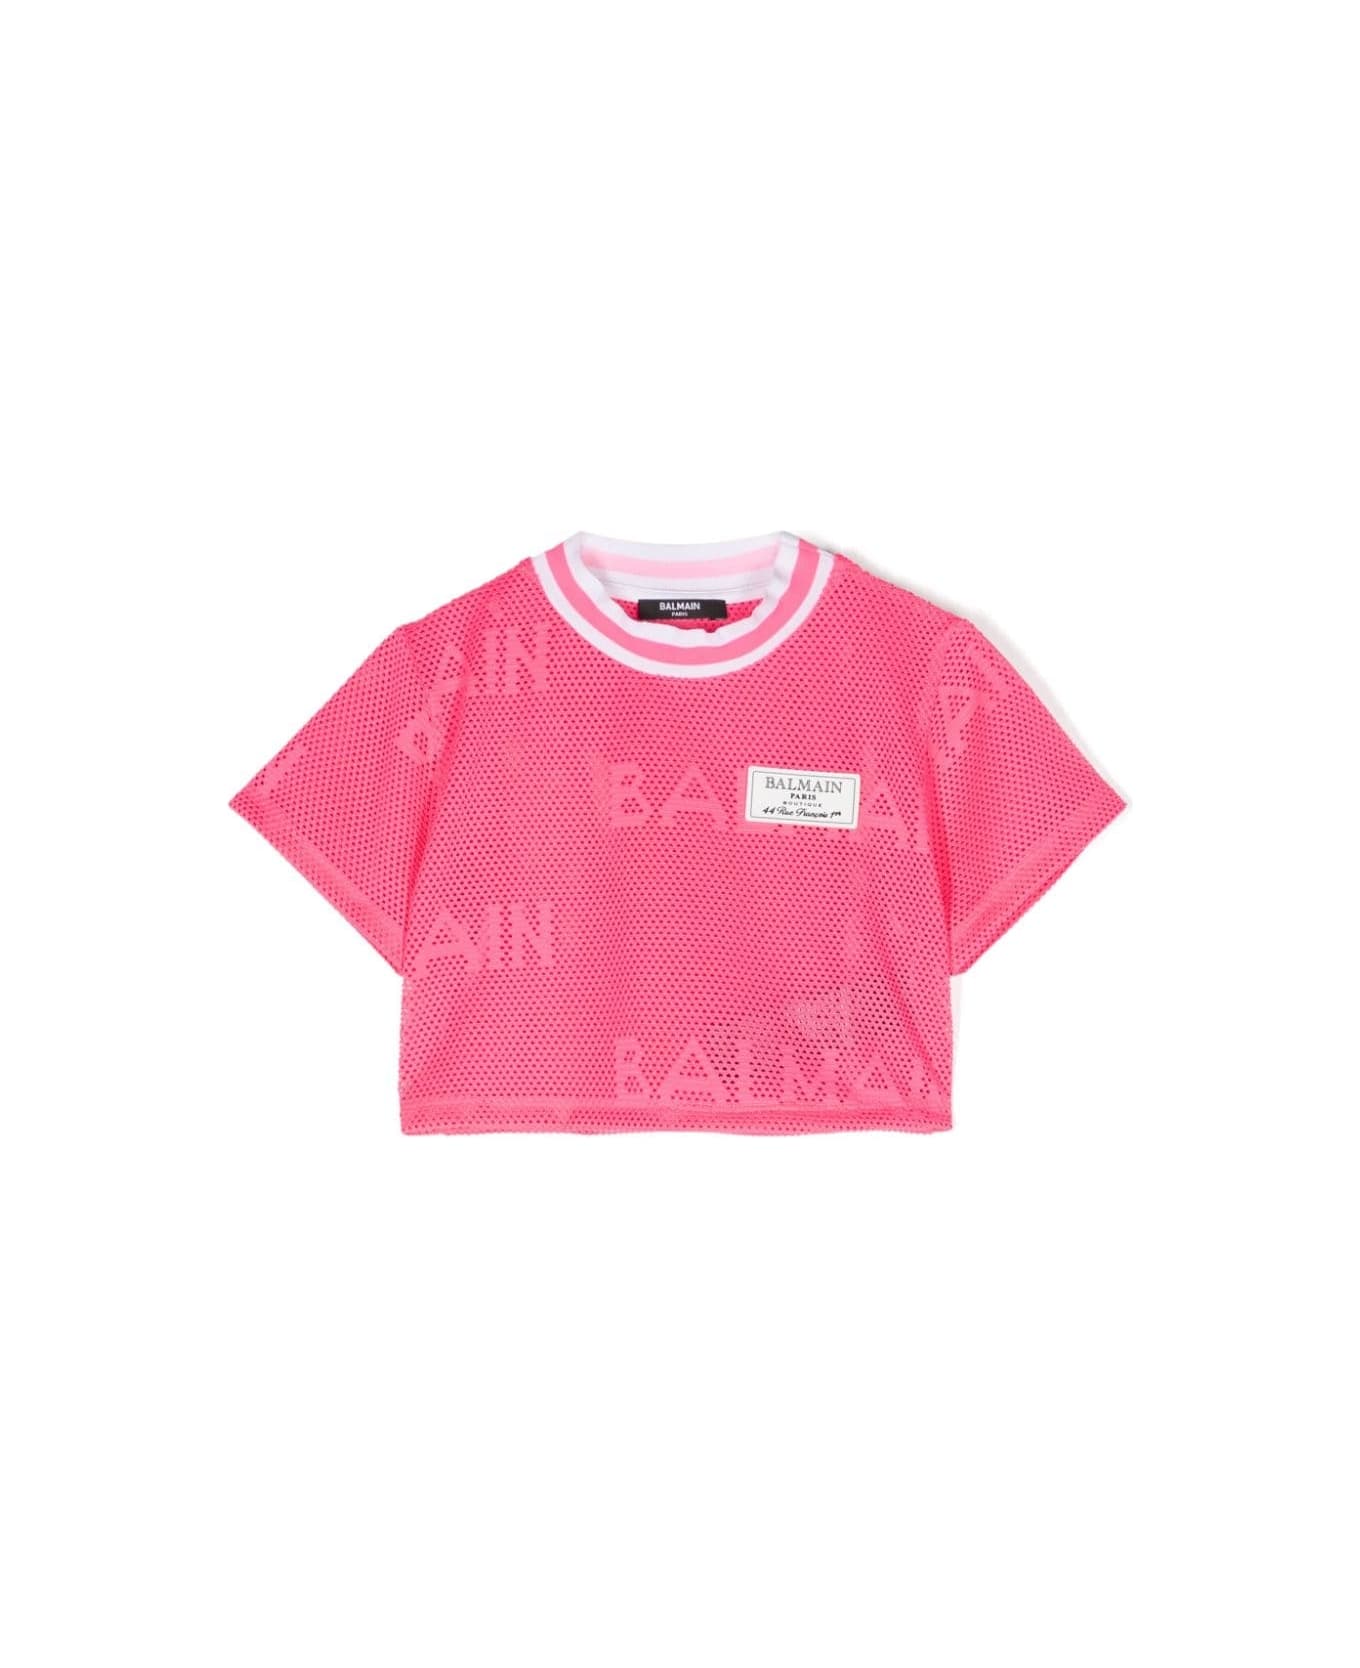 Balmain T-shirt With Application - Pink